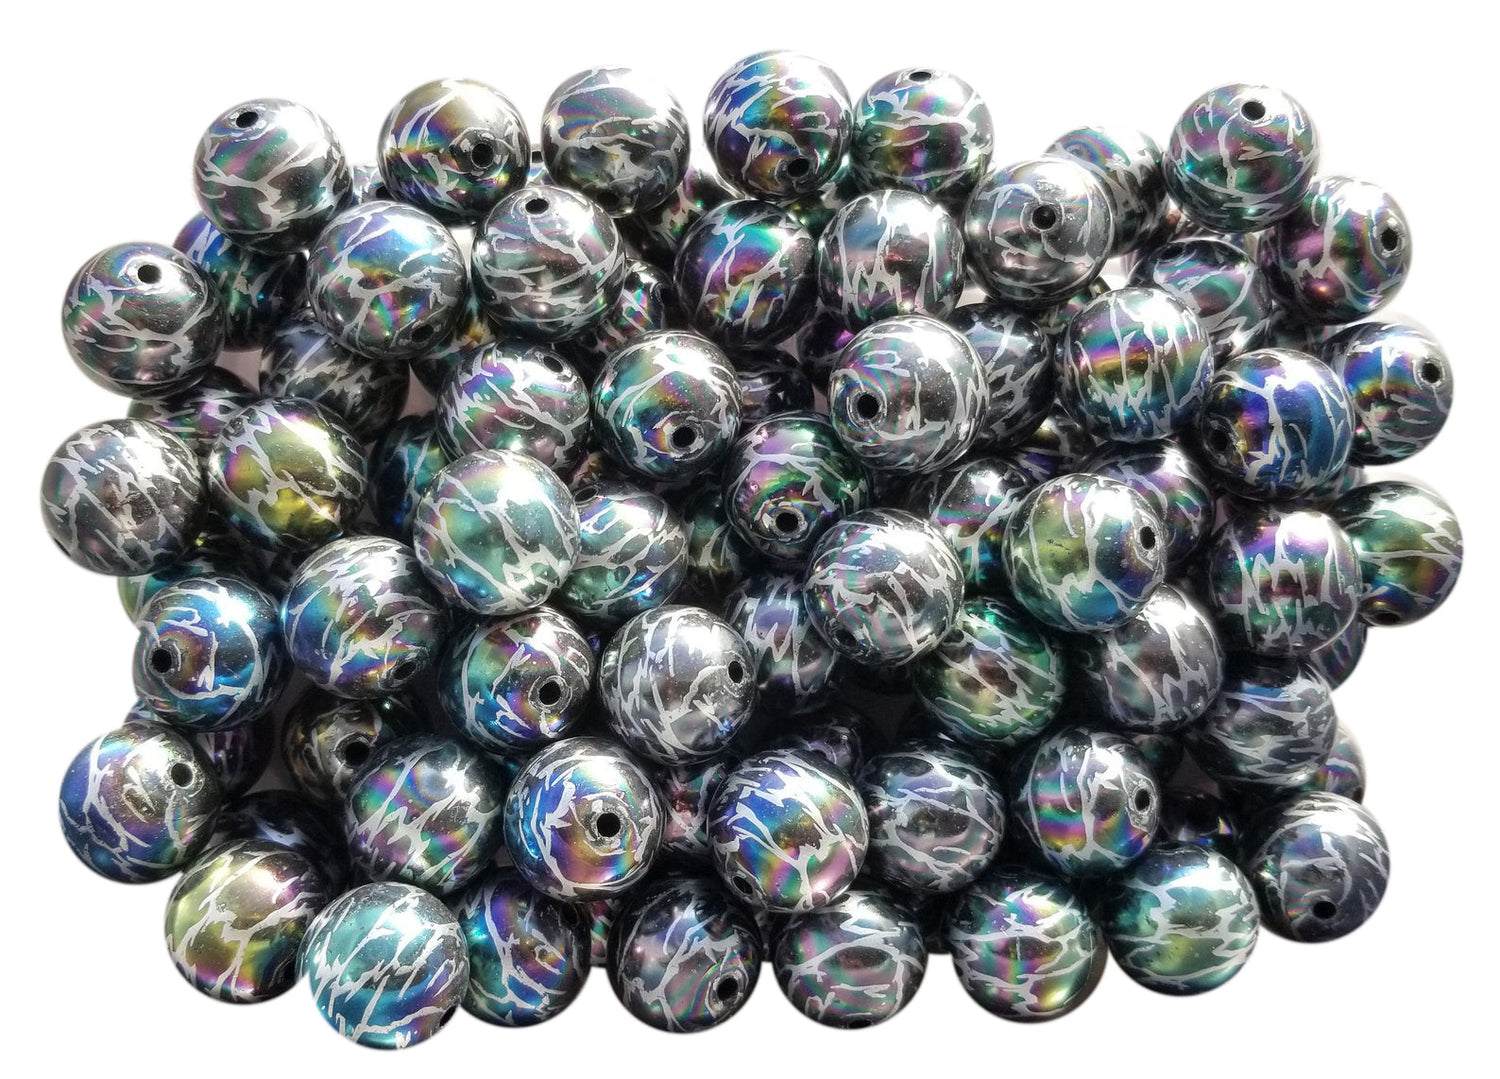 iridescent lightning 20mm printed bubblegum beads